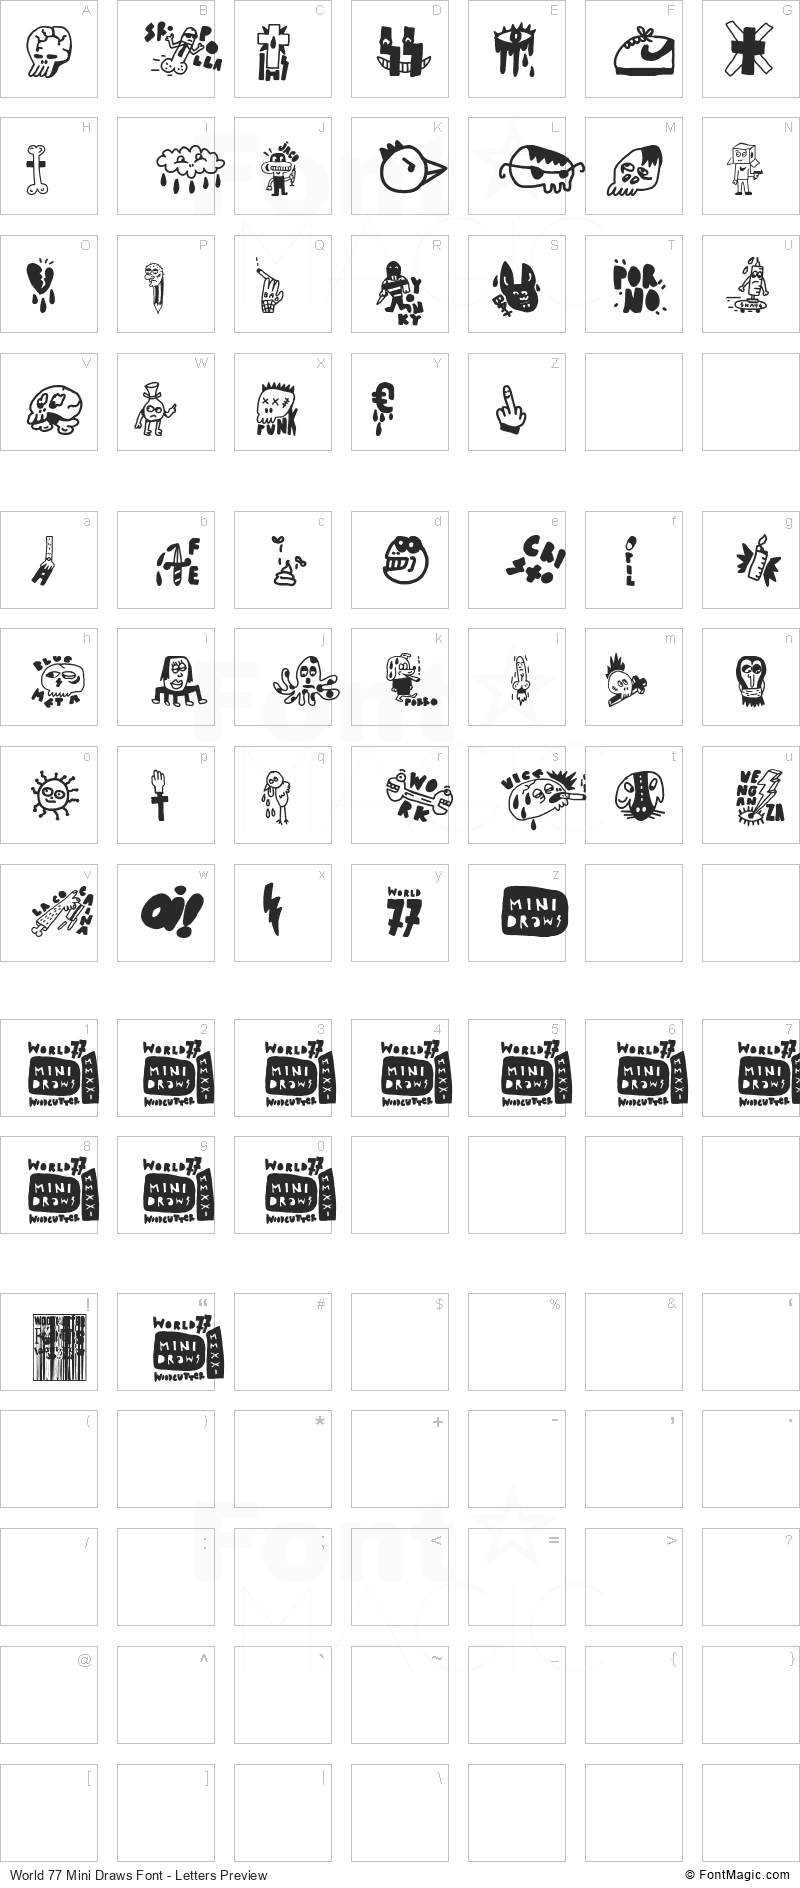 World 77 Mini Draws Font - All Latters Preview Chart